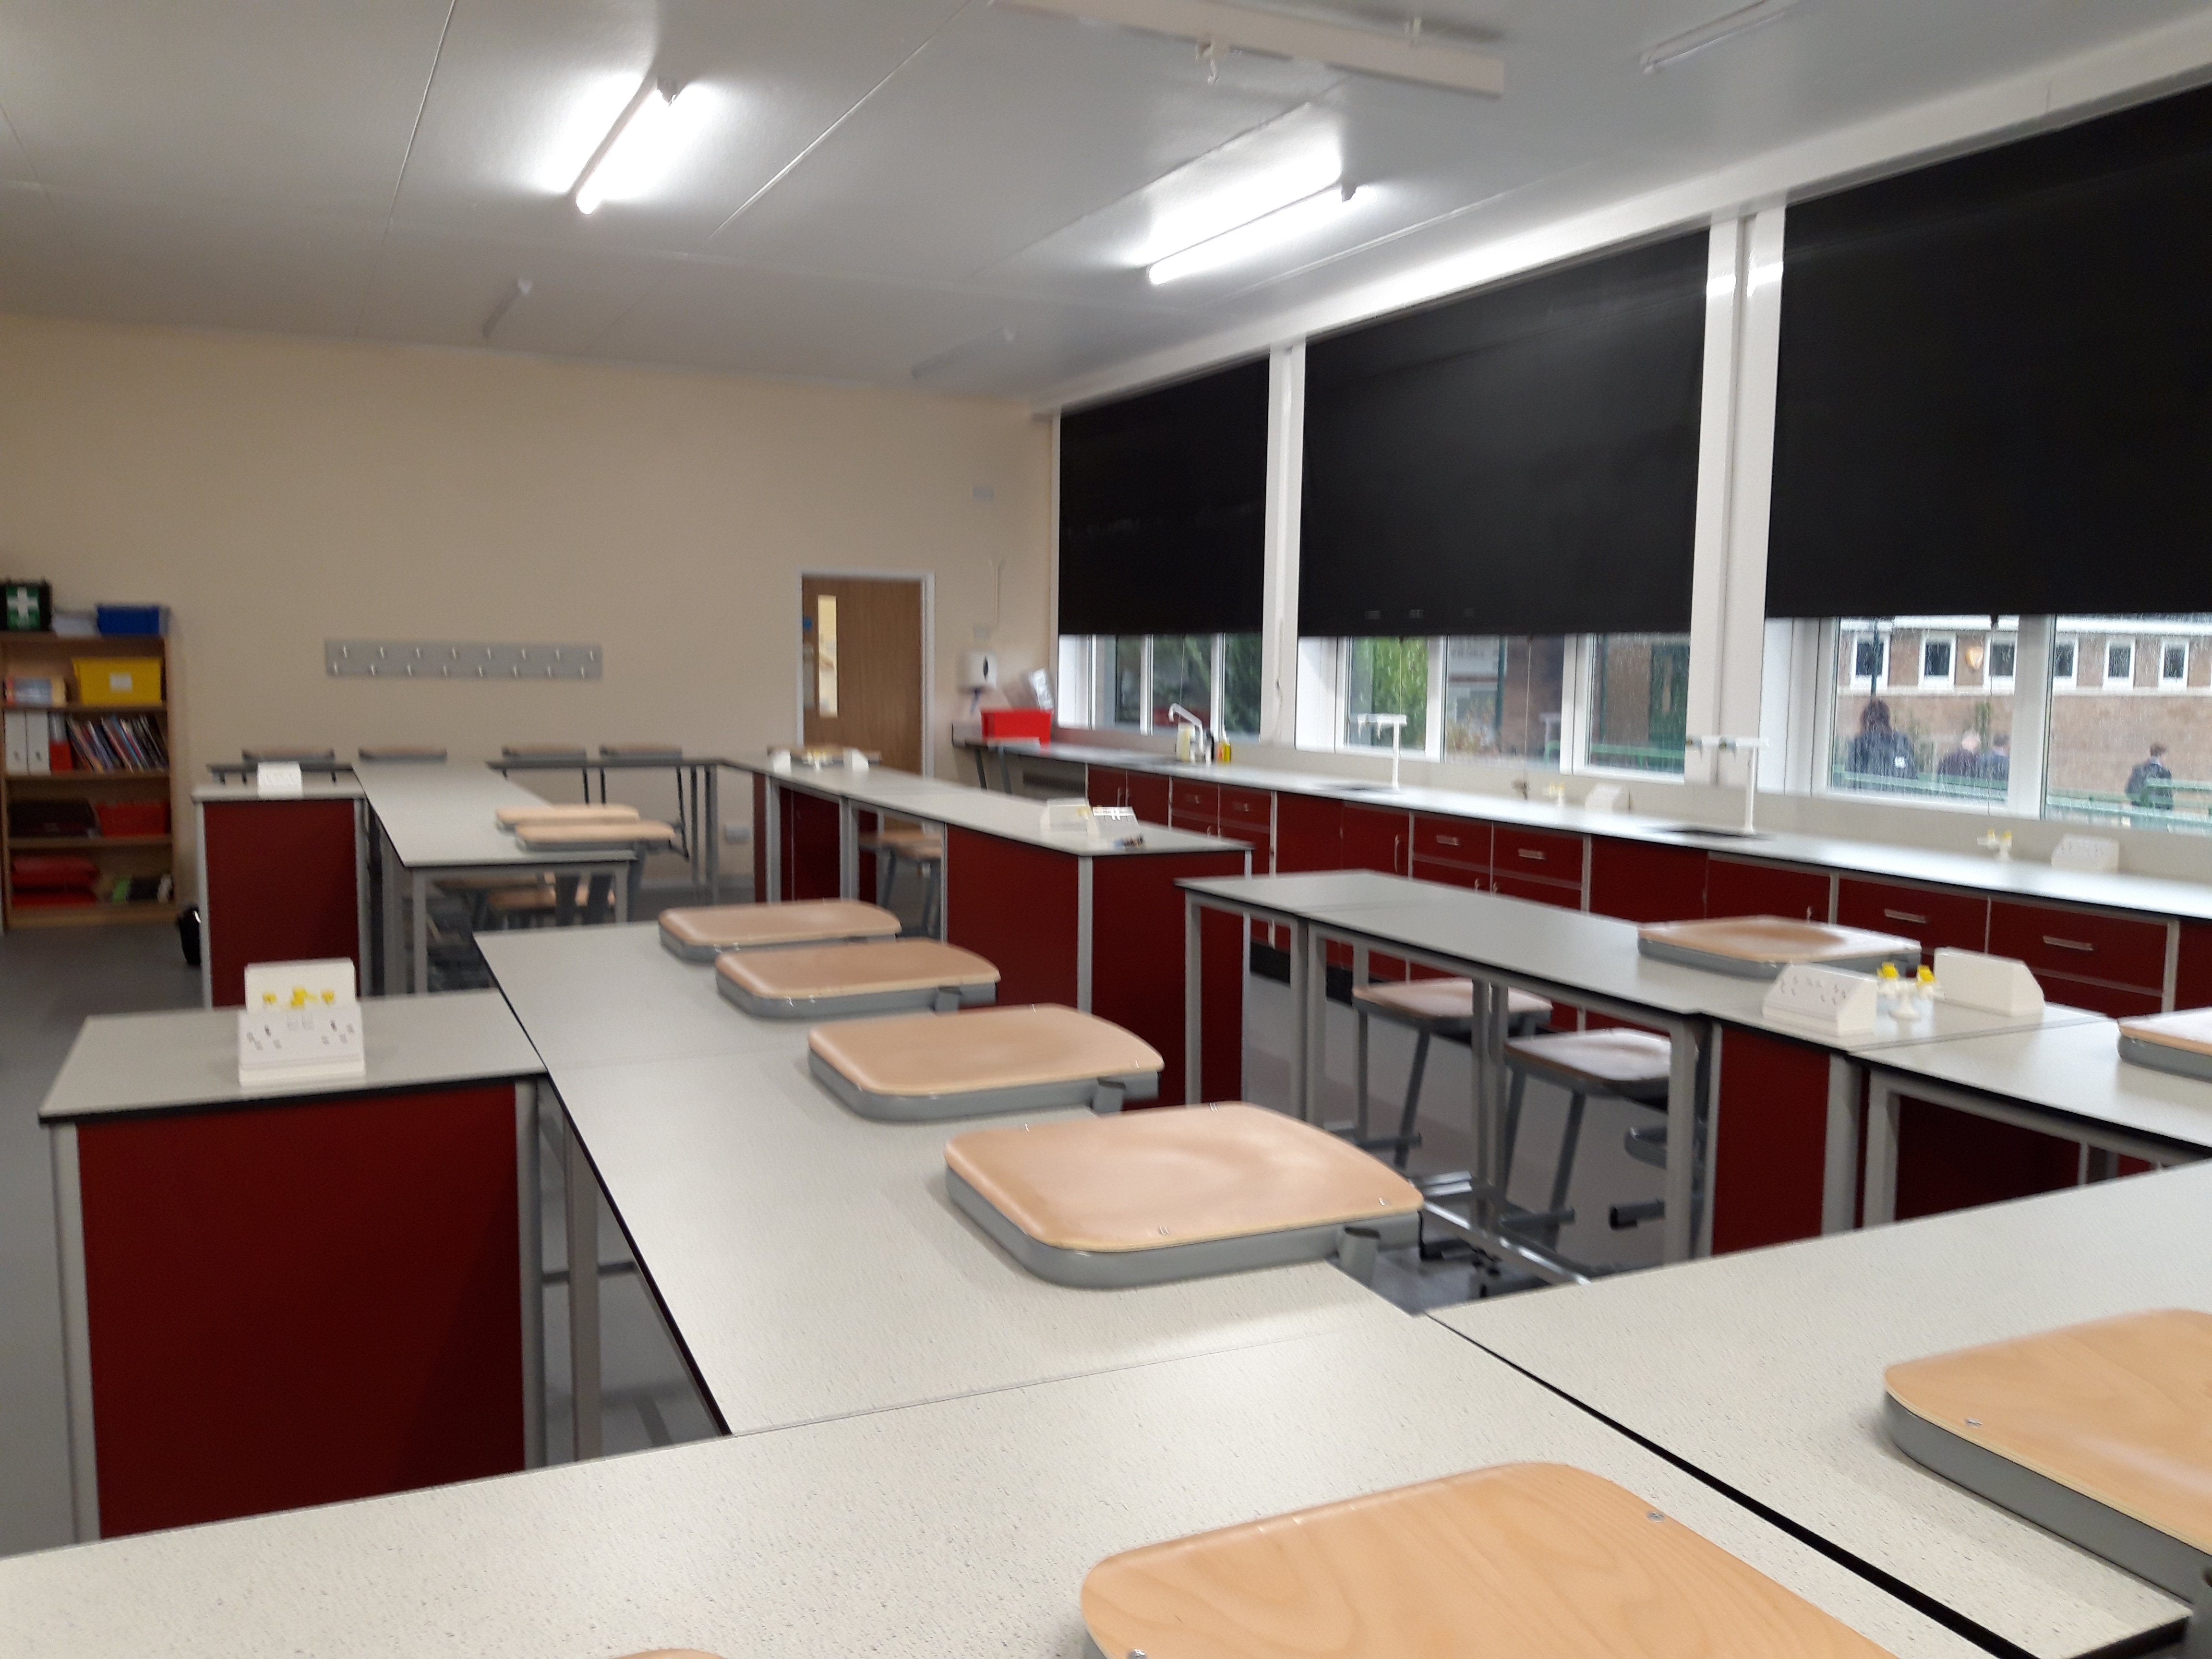 Science Classroom refurbishment - After 